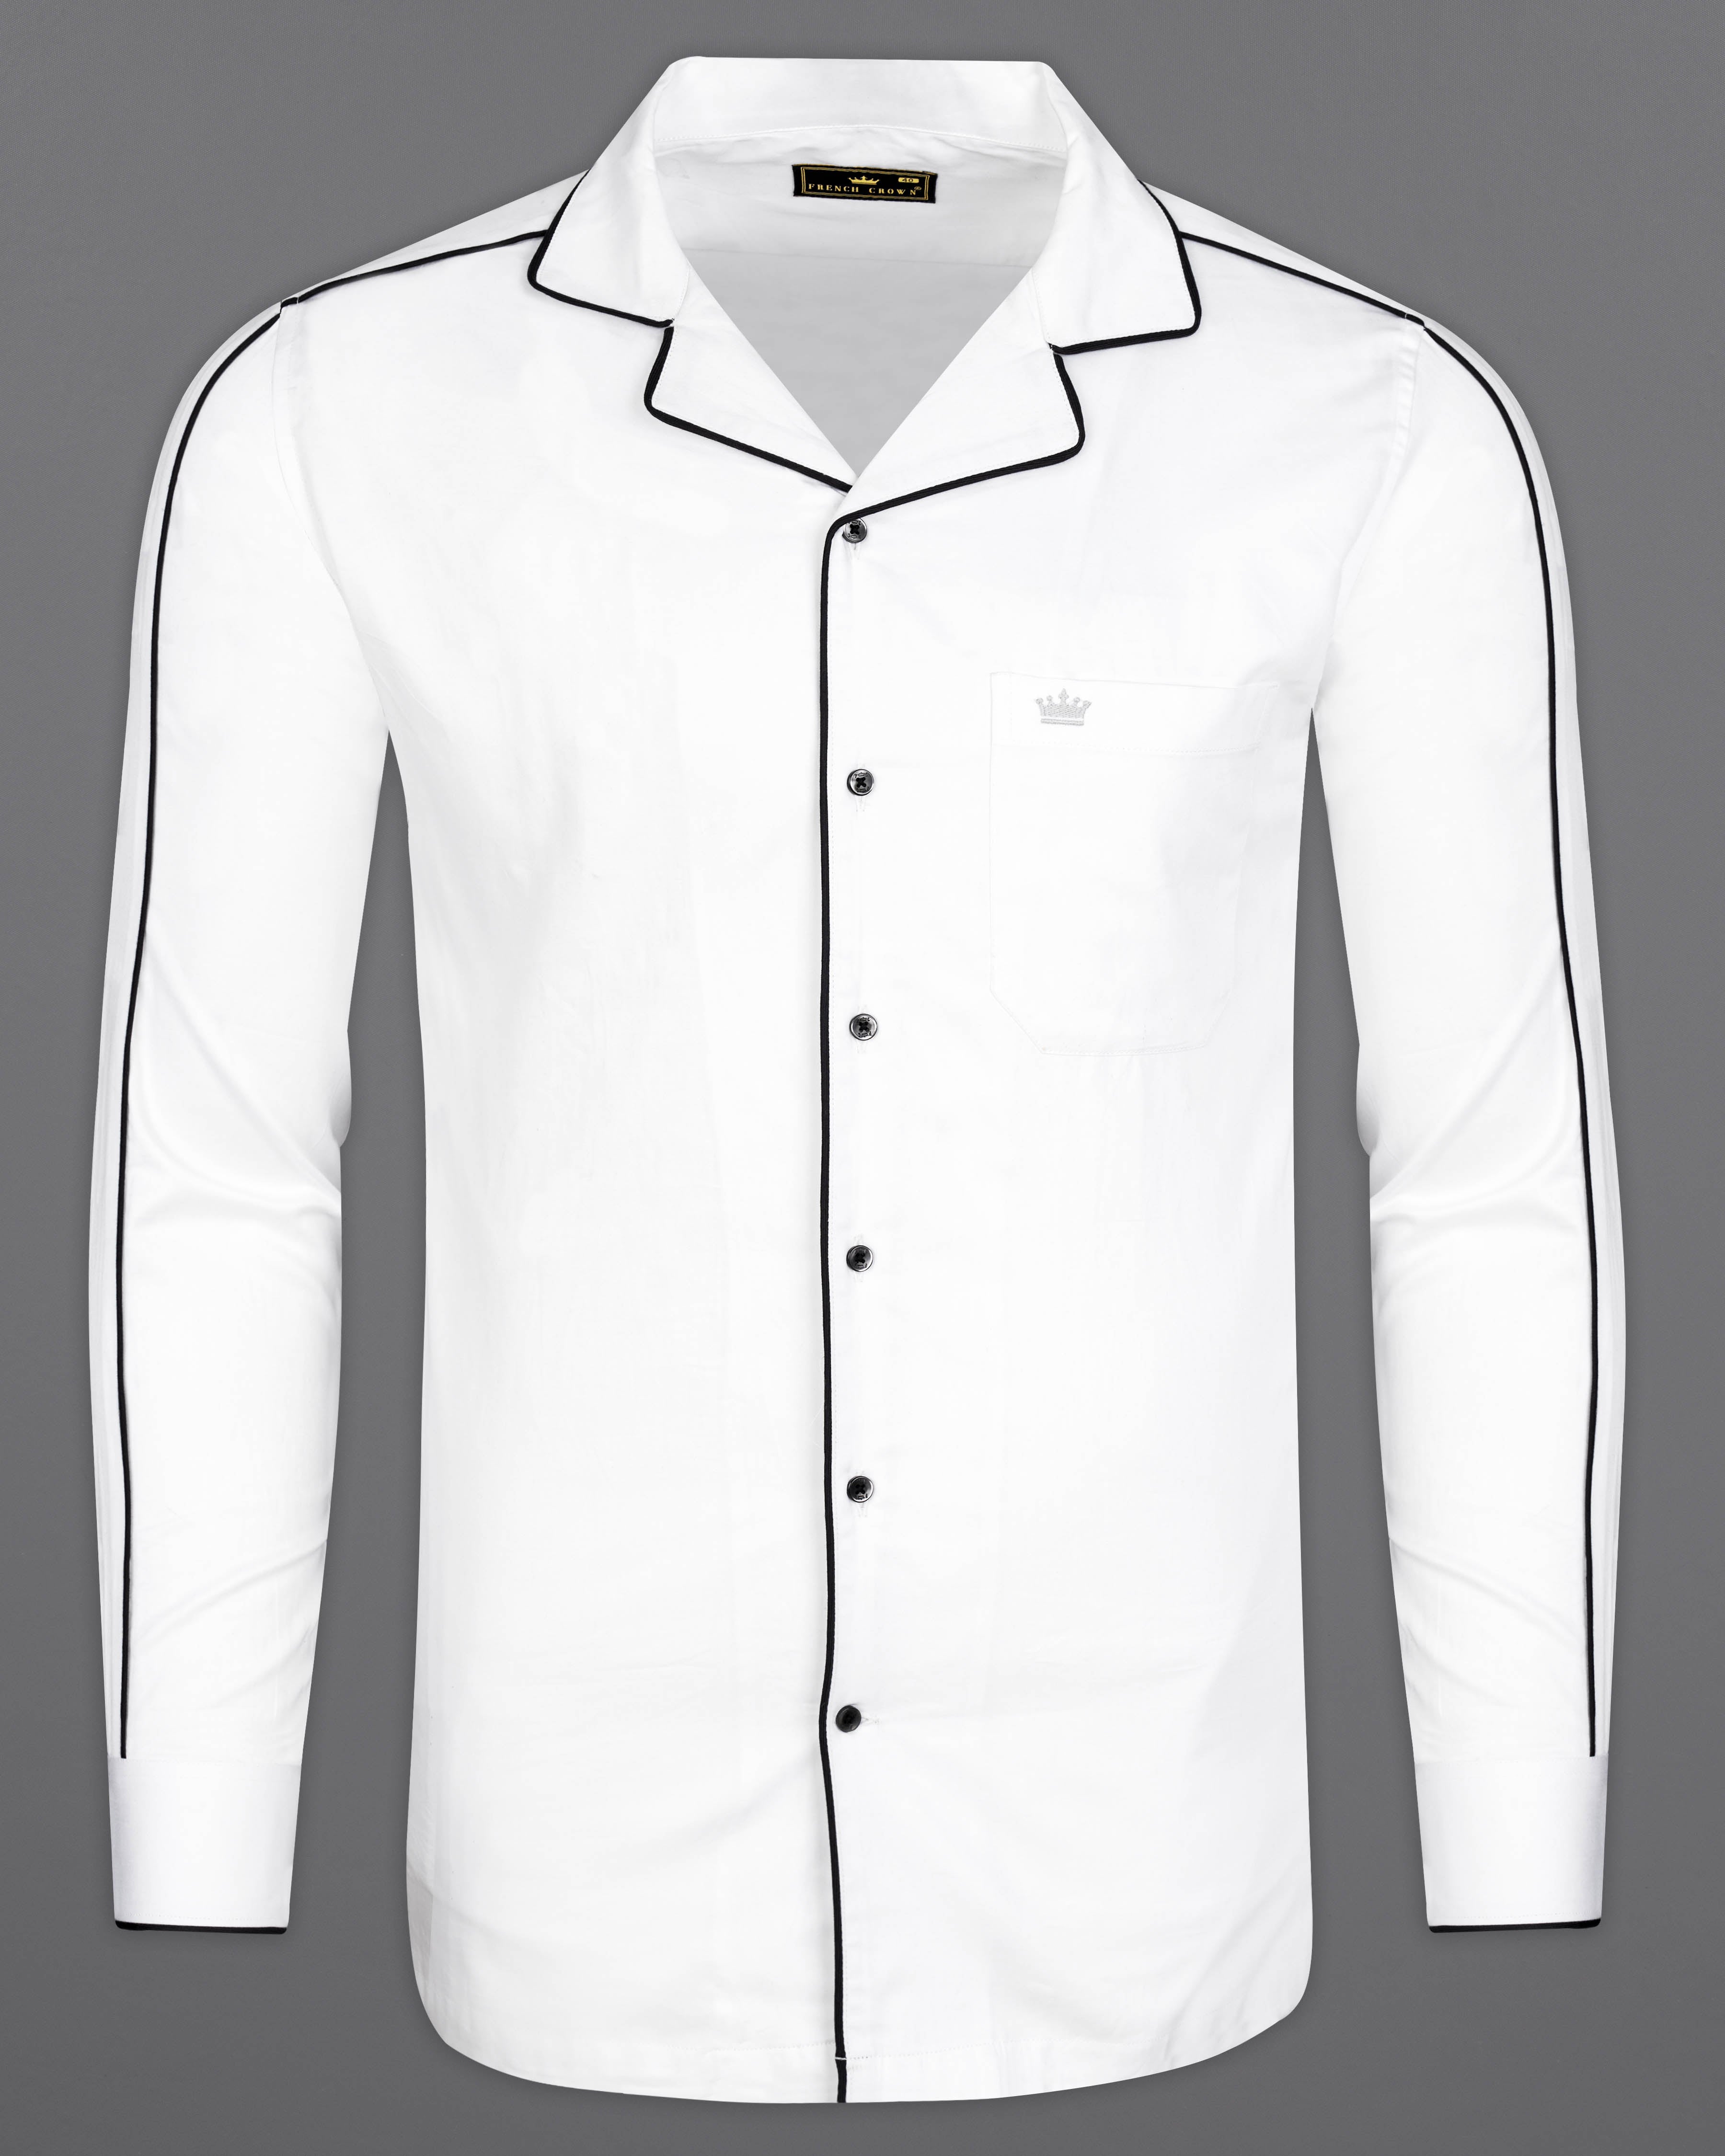 Bright White with Black Piping Work Super Soft Premium Cotton Designer Shirt 9551-CC-BLK-P485-38, 9551-CC-BLK-P485-H-38, 9551-CC-BLK-P485-39, 9551-CC-BLK-P485-H-39, 9551-CC-BLK-P485-40, 9551-CC-BLK-P485-H-40, 9551-CC-BLK-P485-42, 9551-CC-BLK-P485-H-42, 9551-CC-BLK-P485-44, 9551-CC-BLK-P485-H-44, 9551-CC-BLK-P485-46, 9551-CC-BLK-P485-H-46, 9551-CC-BLK-P485-48, 9551-CC-BLK-P485-H-48, 9551-CC-BLK-P485-50, 9551-CC-BLK-P485-H-50, 9551-CC-BLK-P485-52, 9551-CC-BLK-P485-H-52